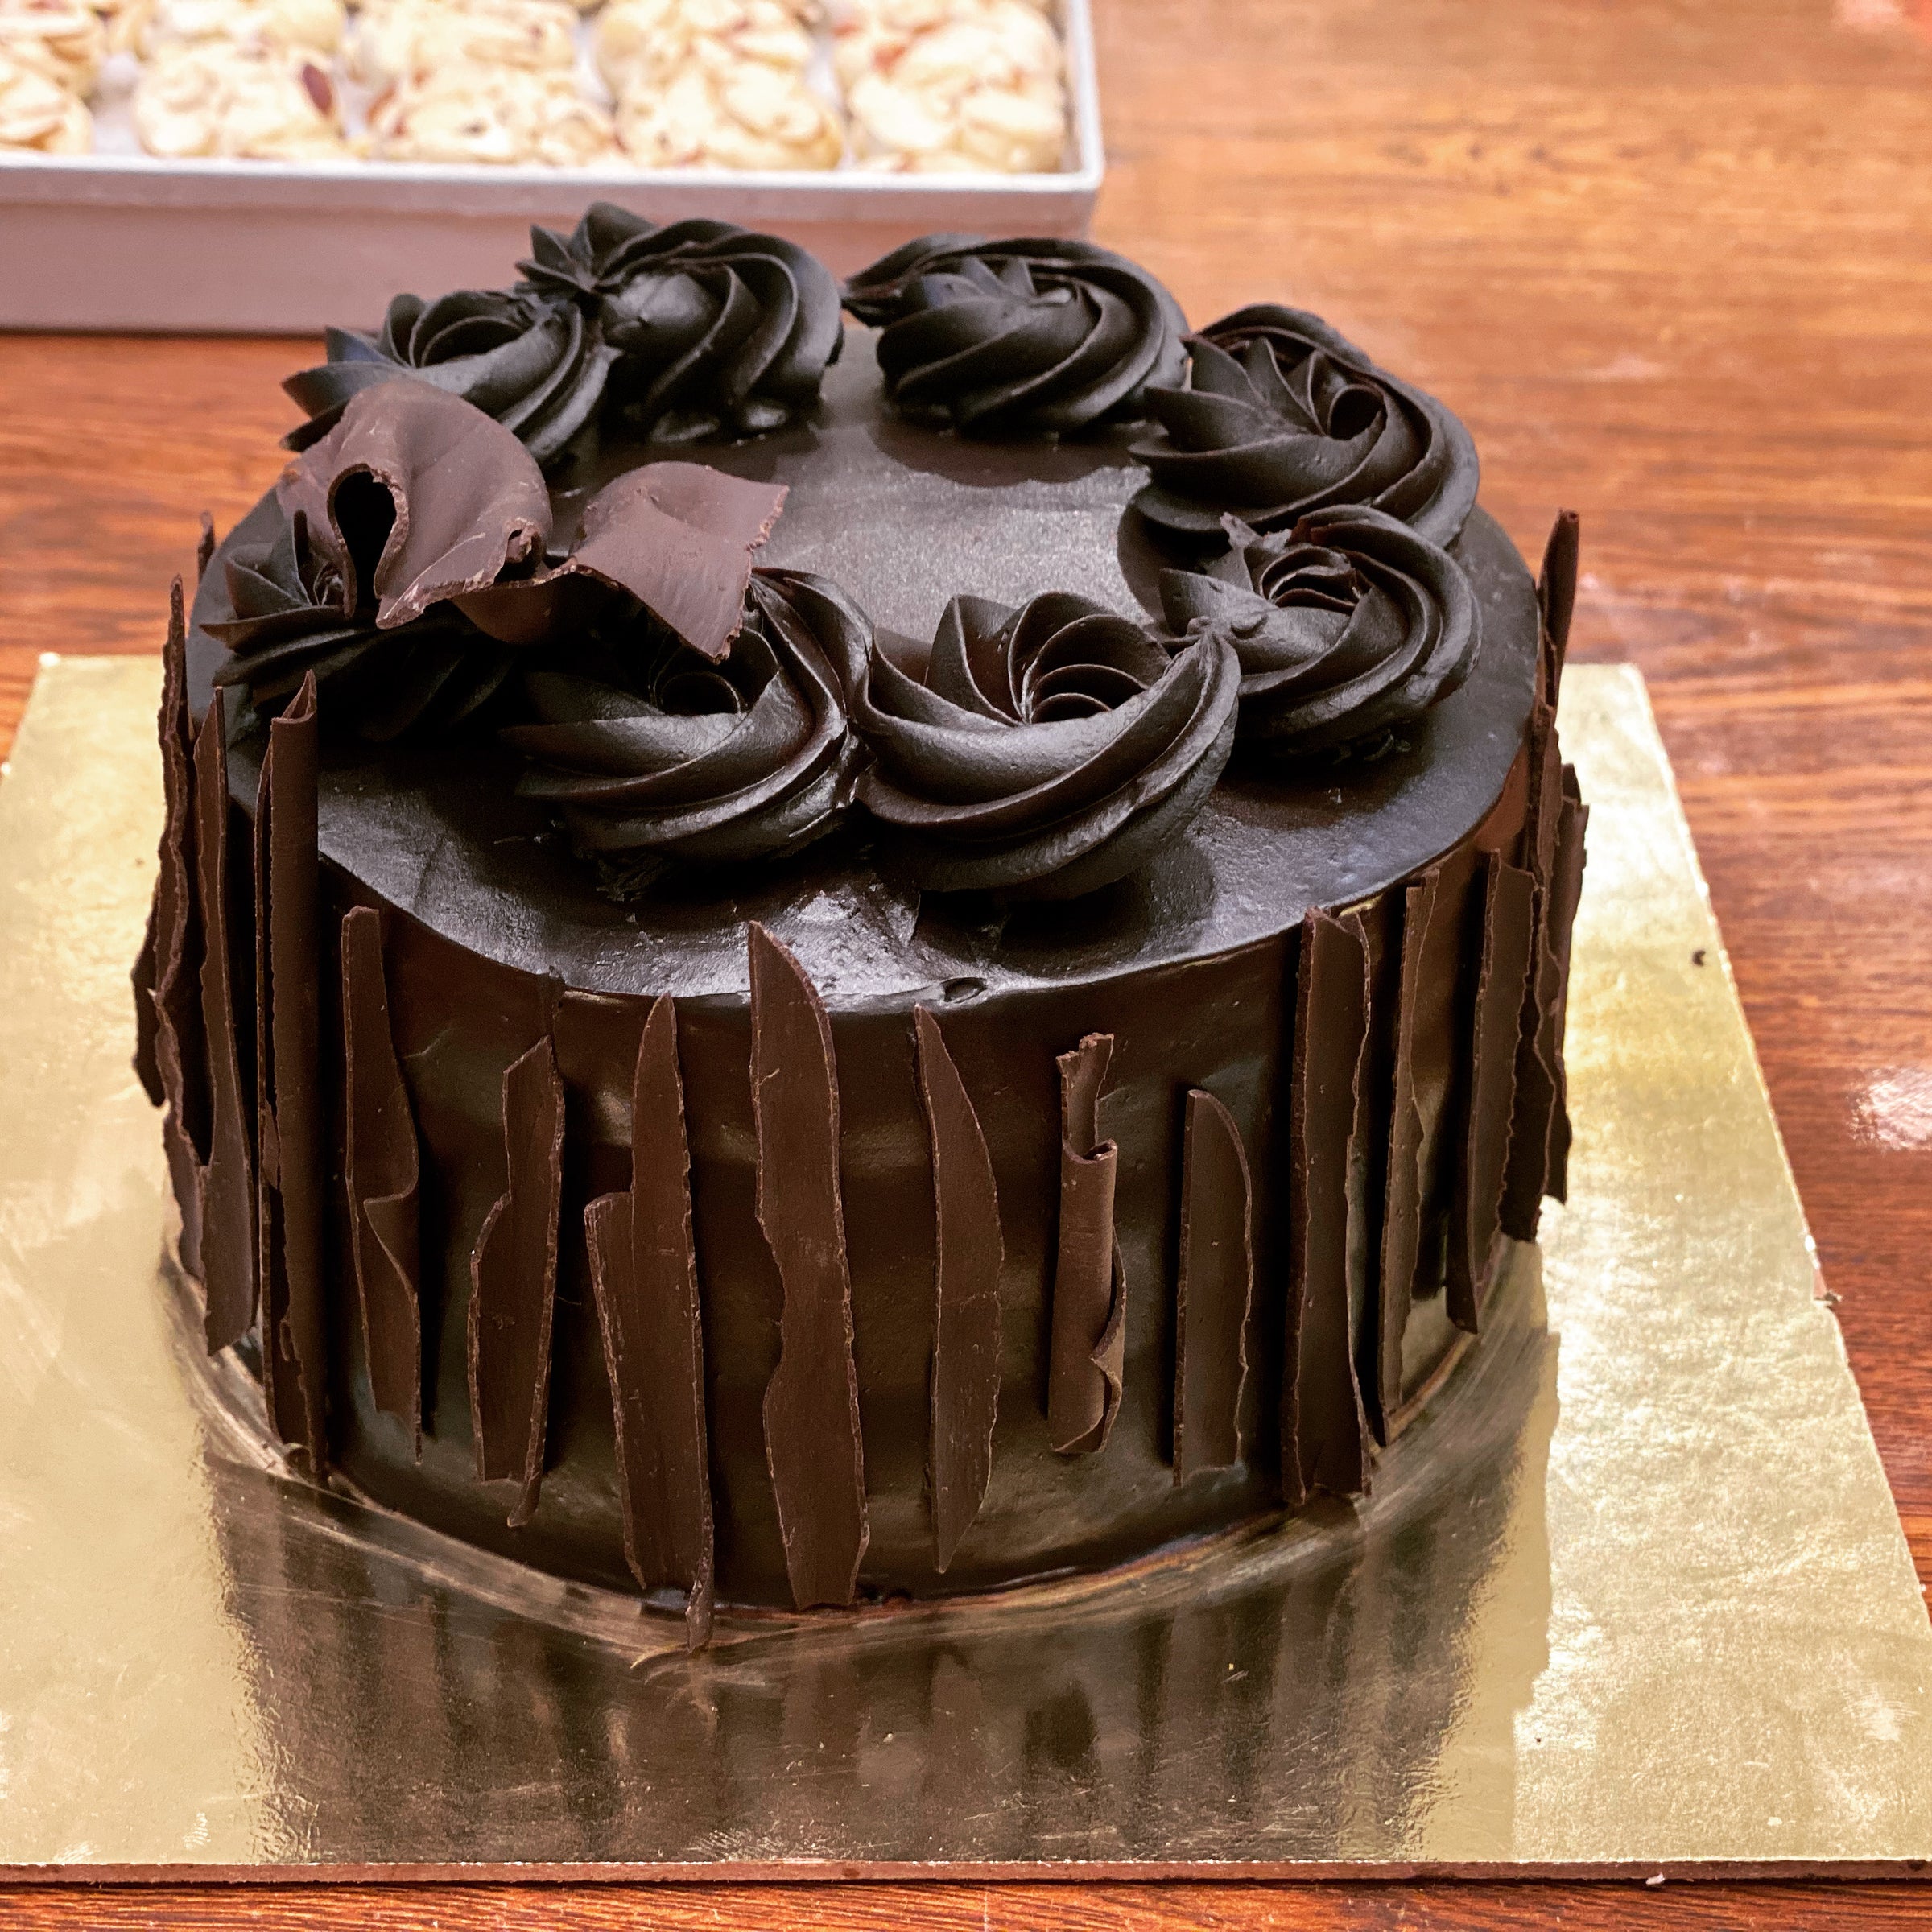 Chocolate Ganache Buttercream — Arise Cake Creations